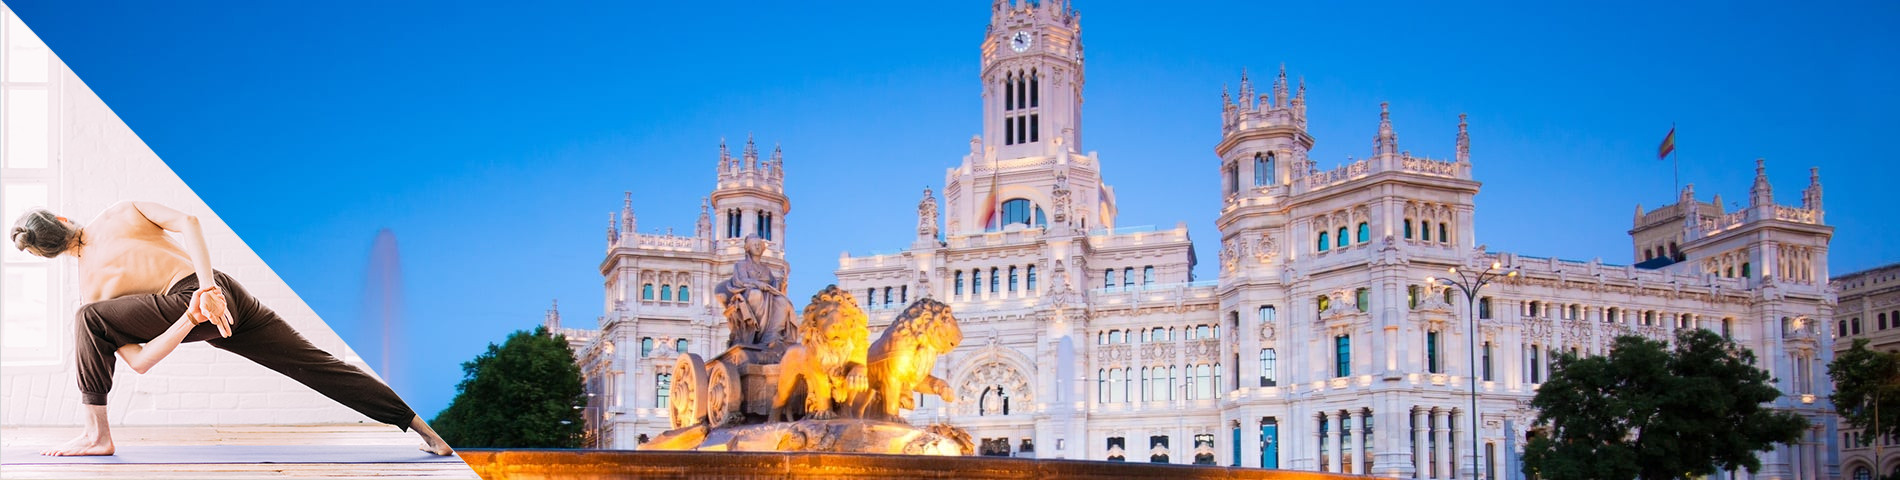 Madrid - Spanska & yoga